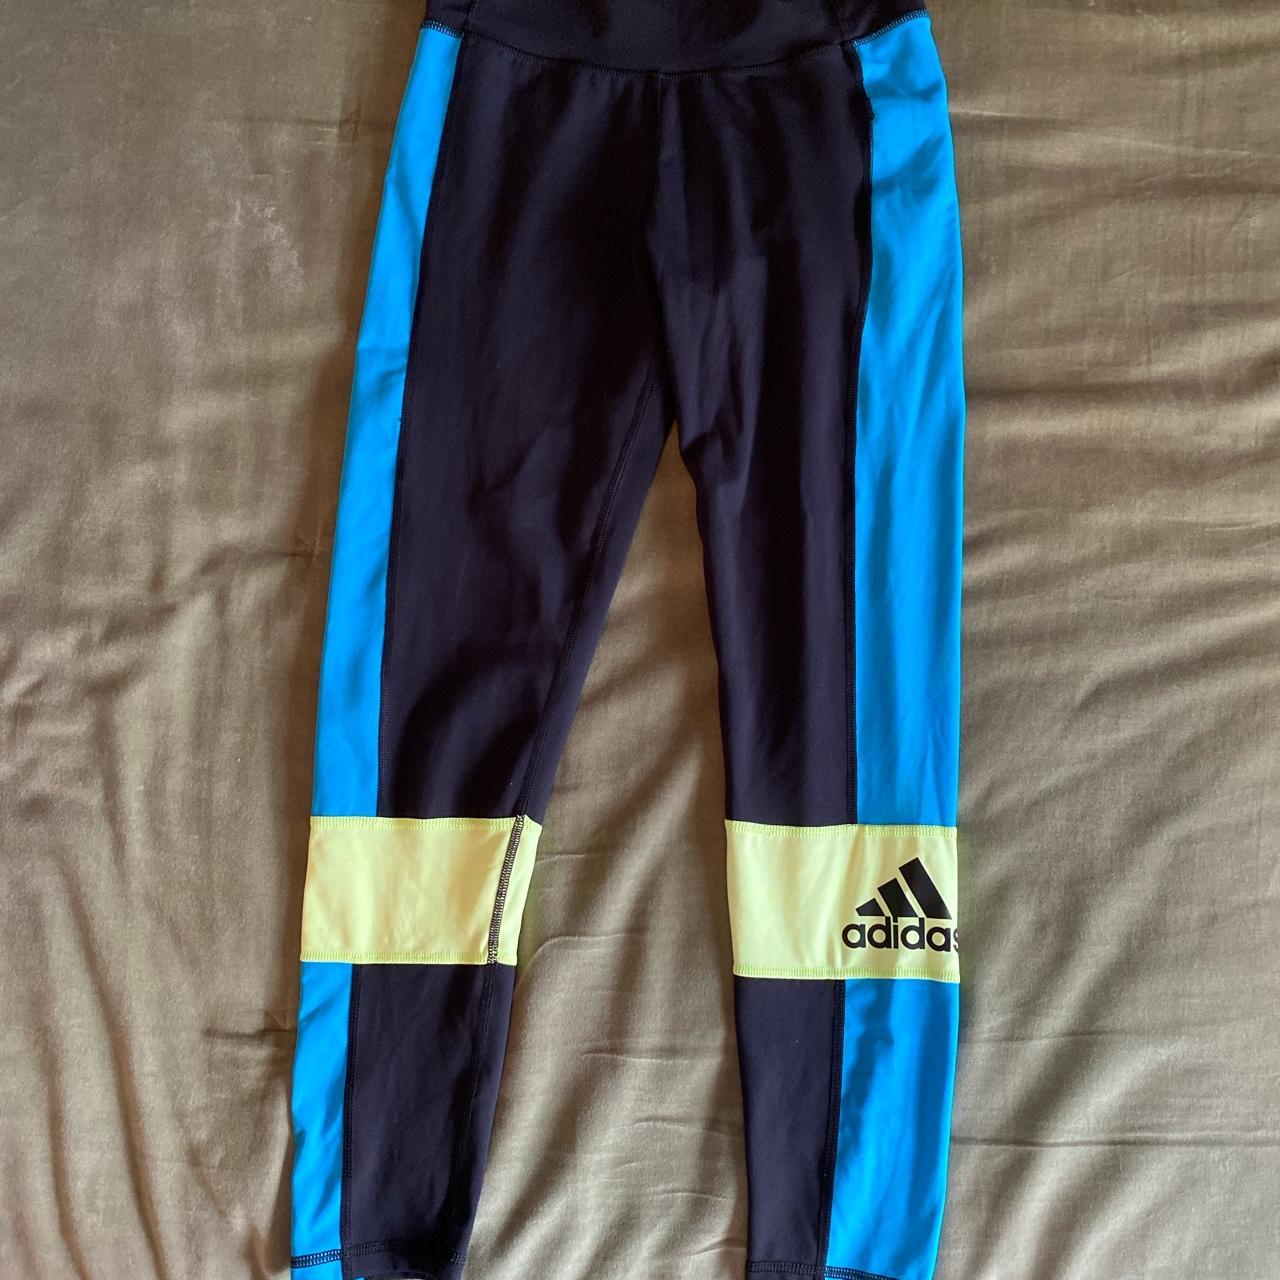 Adidas Climalite leggings size M , Colorblockadidas blue yellow